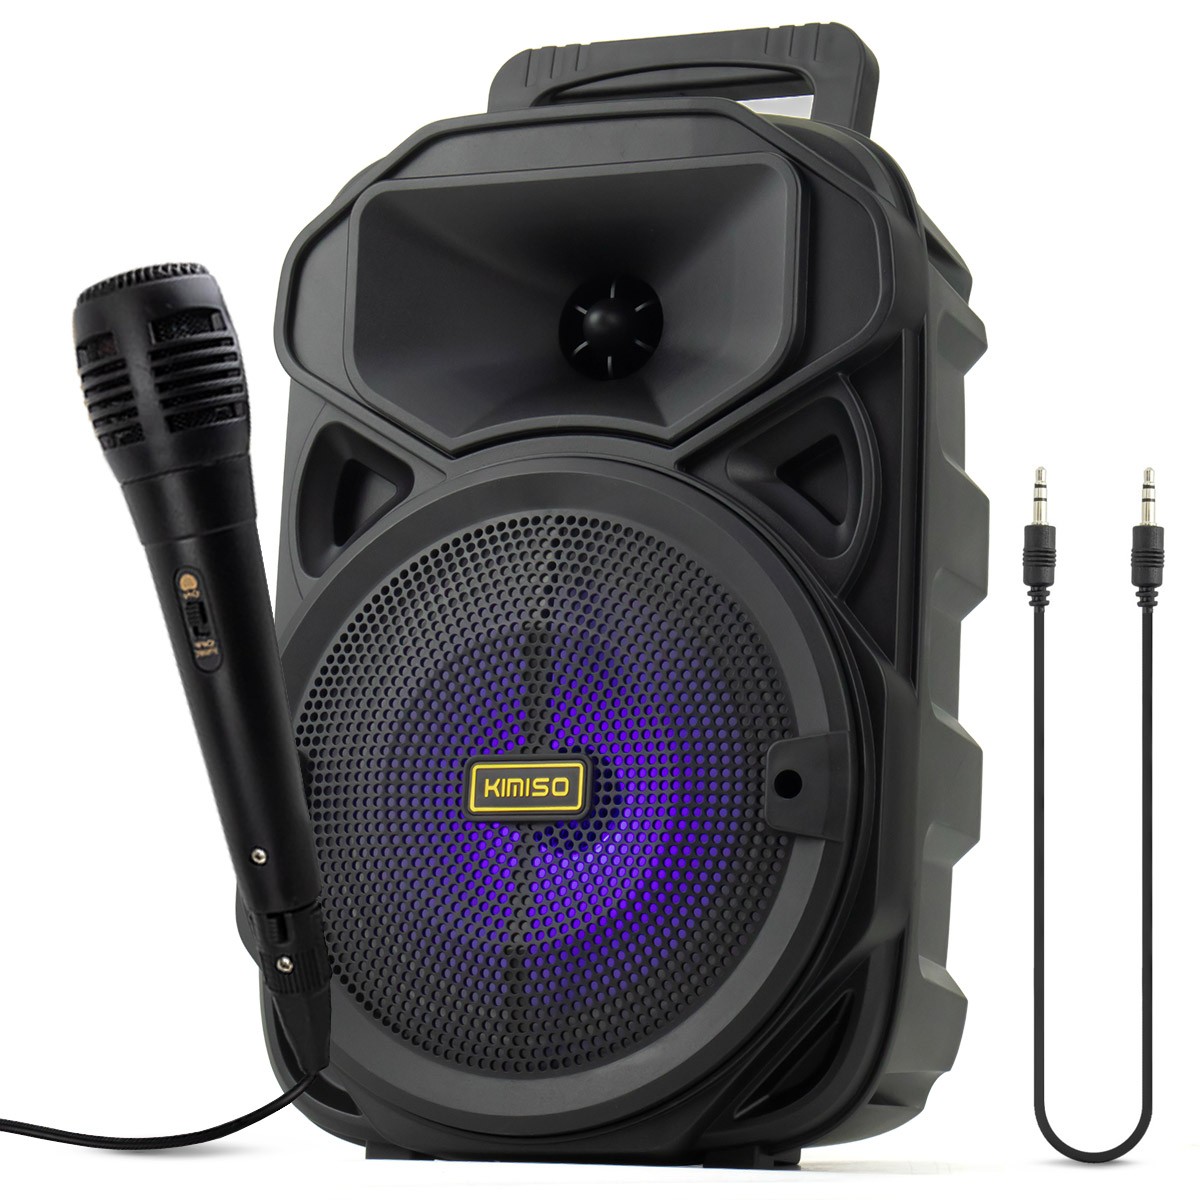 Caixa de Som Bluetooth Portátil 1200 Watts PMPO com Microfone + Cabo Auxiliar P2 Kimiso KMS-3382